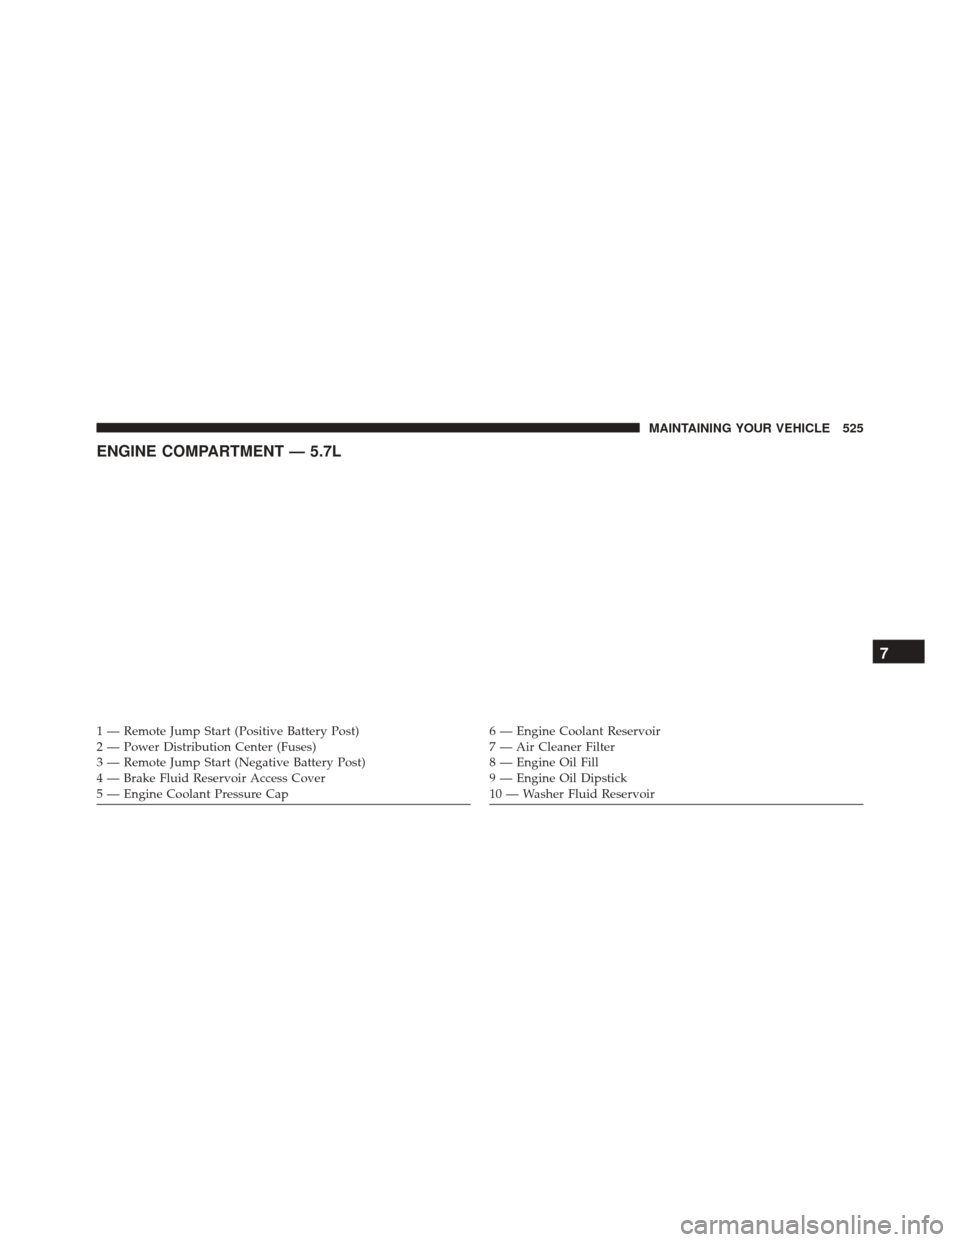 DODGE CHALLENGER 2016 3.G Owners Manual ENGINE COMPARTMENT — 5.7L
1 — Remote Jump Start (Positive Battery Post)
2 — Power Distribution Center (Fuses)
3 — Remote Jump Start (Negative Battery Post)
4 — Brake Fluid Reservoir Access C